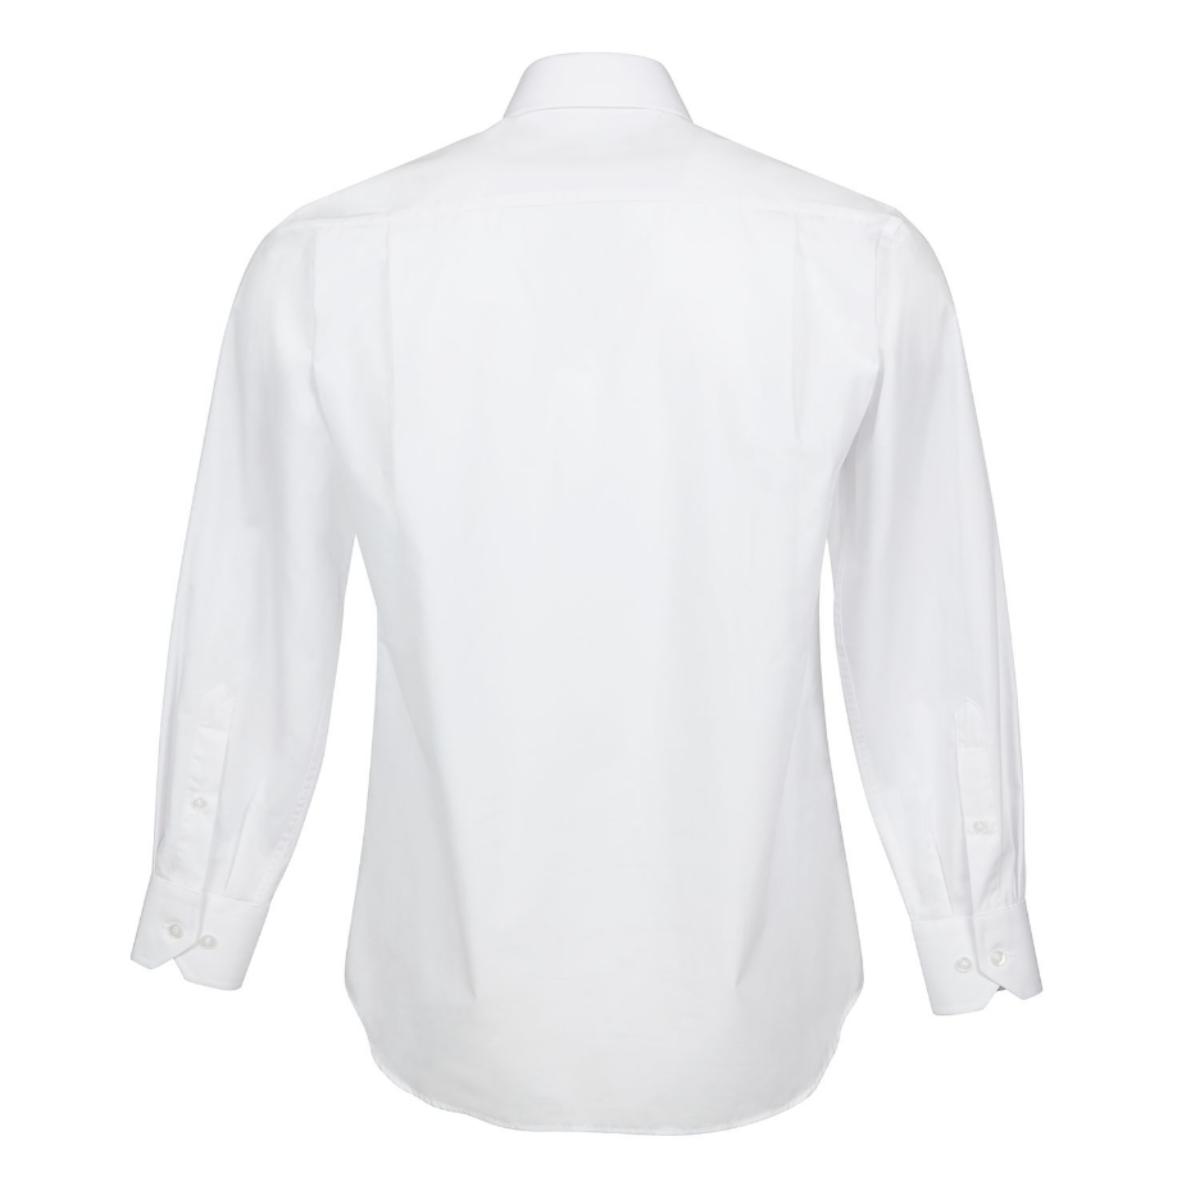 White Dress Shirt w/ Adjustable Cuffs (white)